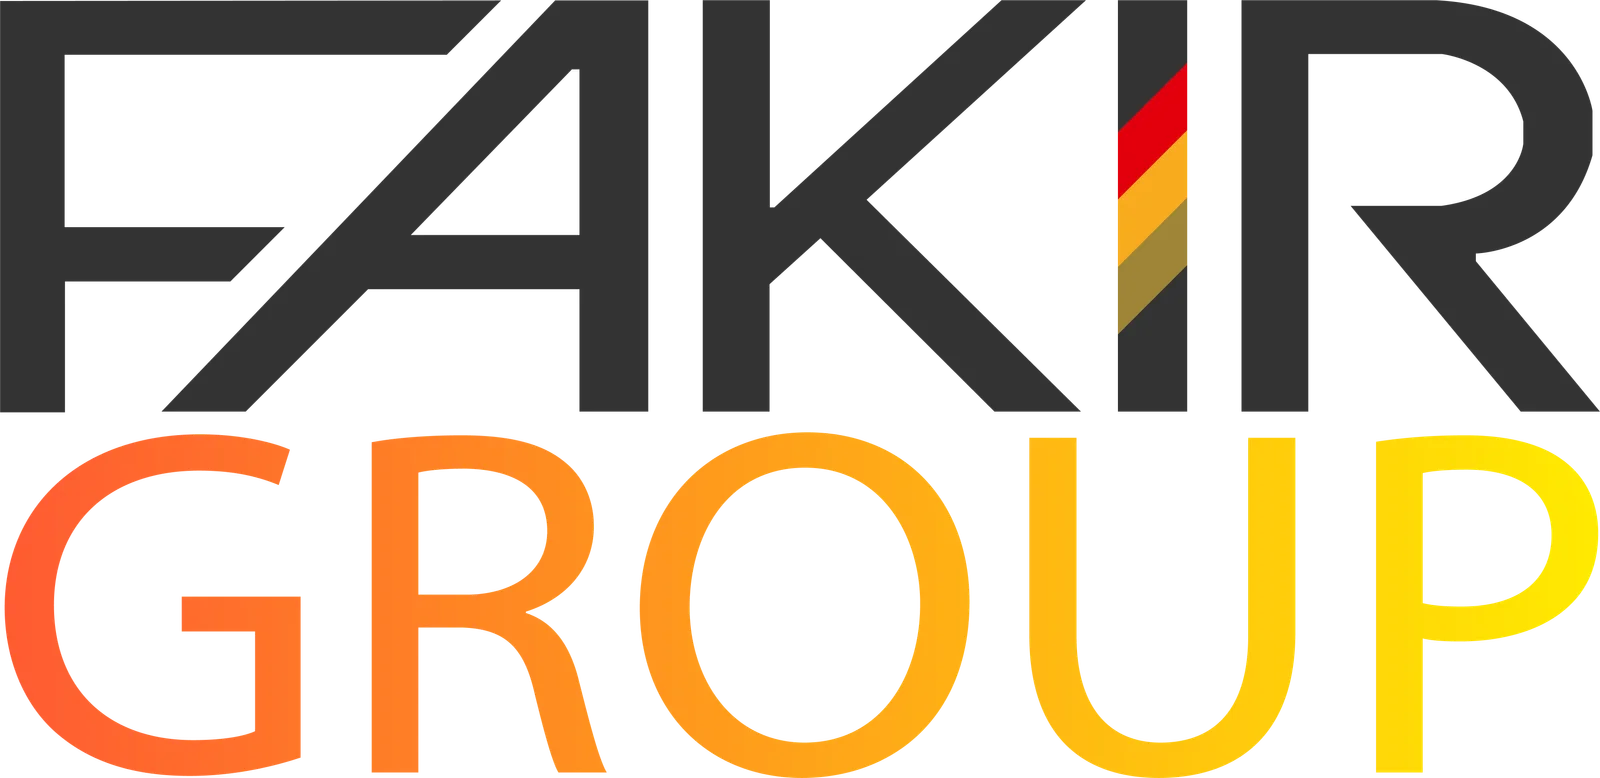 Fakir Group